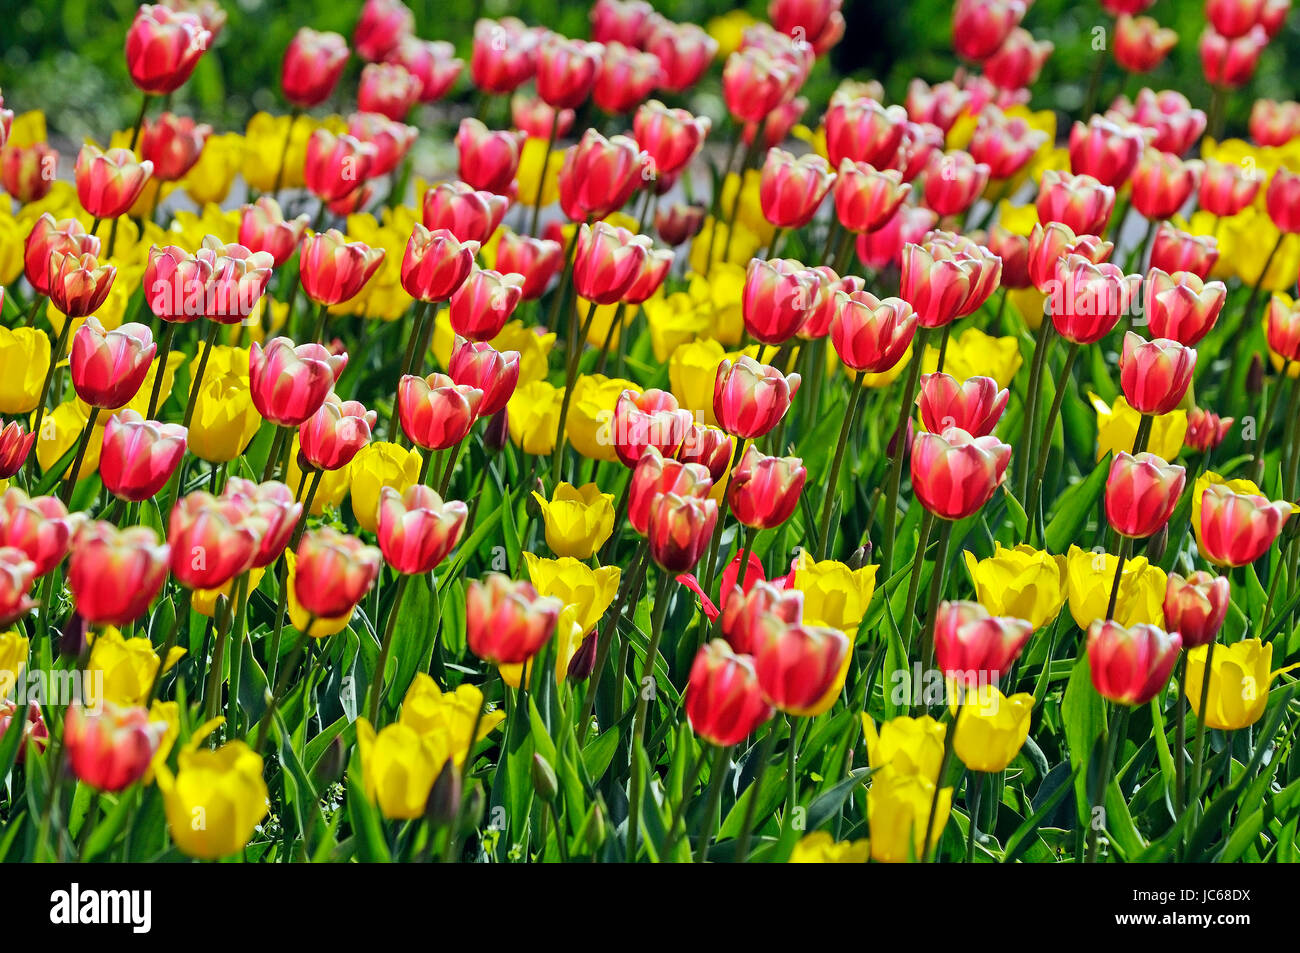 Red and yellow tulips, Tulipa spp. - Tulip field, Rote und gelbe Tulpen, Tulipa spp. - Tulpenfeld Stock Photo